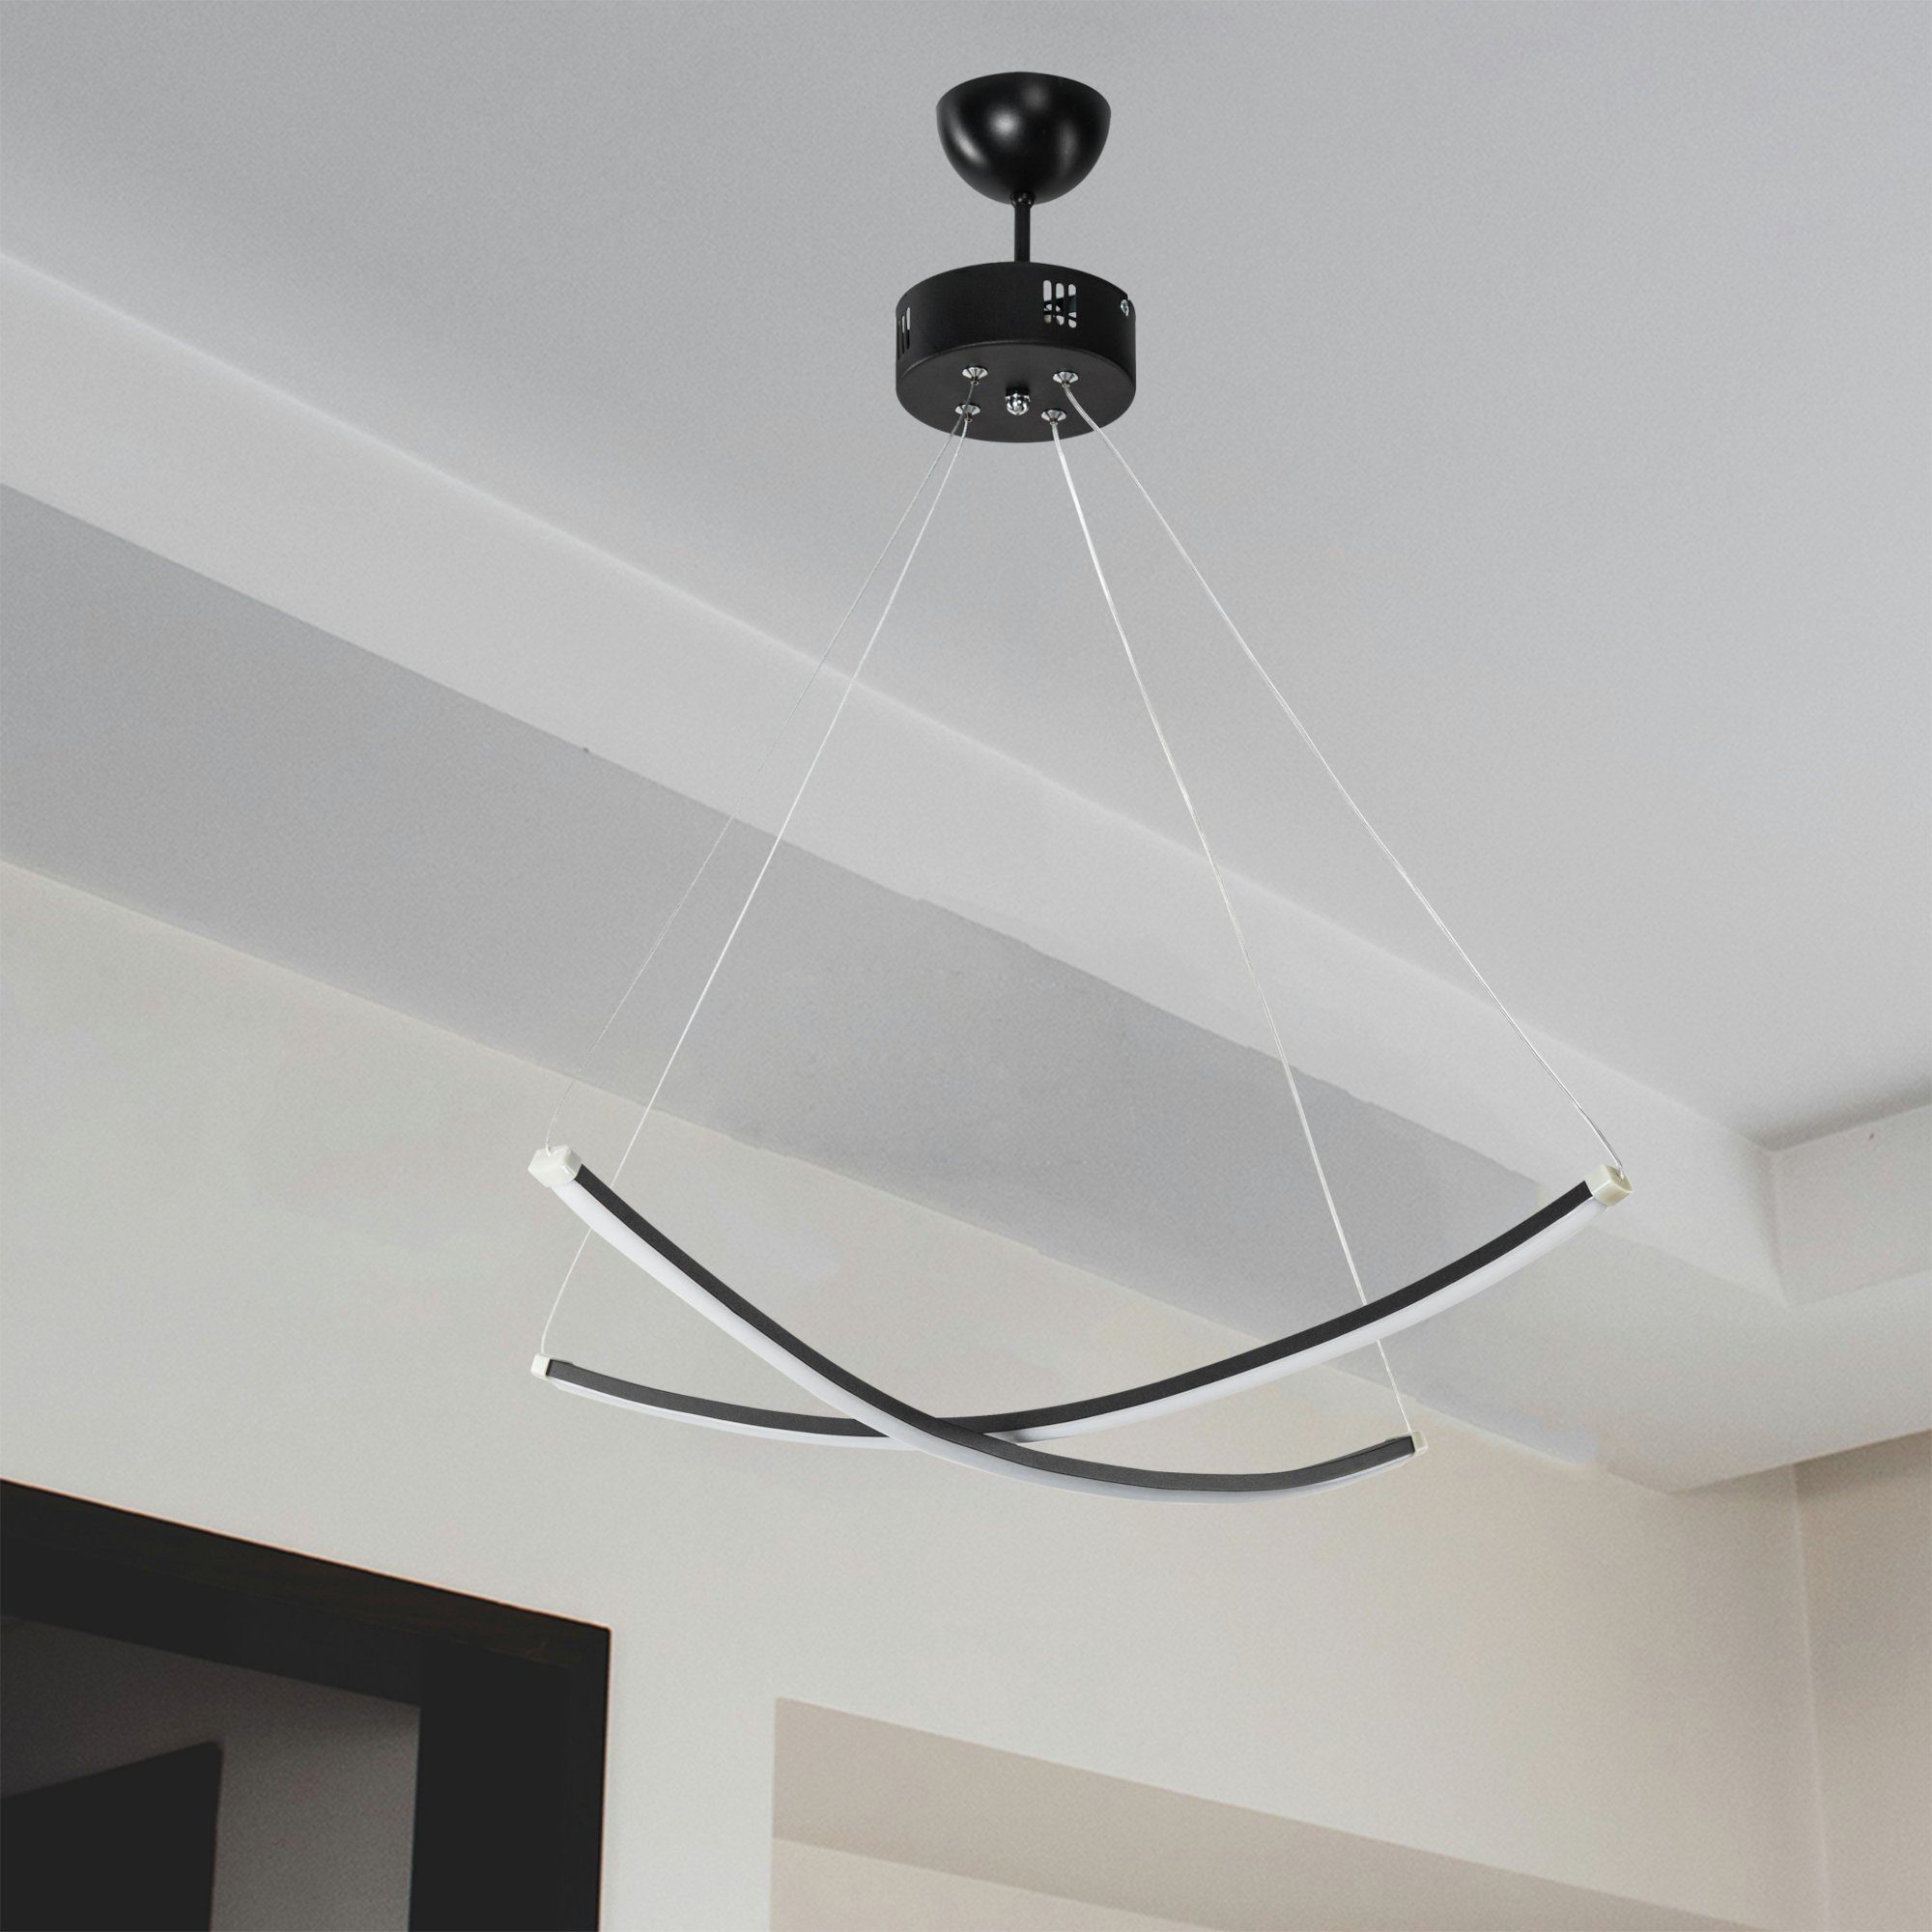 lux.pro Pendelleuchte, LED fest integriert, »Eastbourne« LED Hängelampe, 75x69cm, Schwarz/Weiß